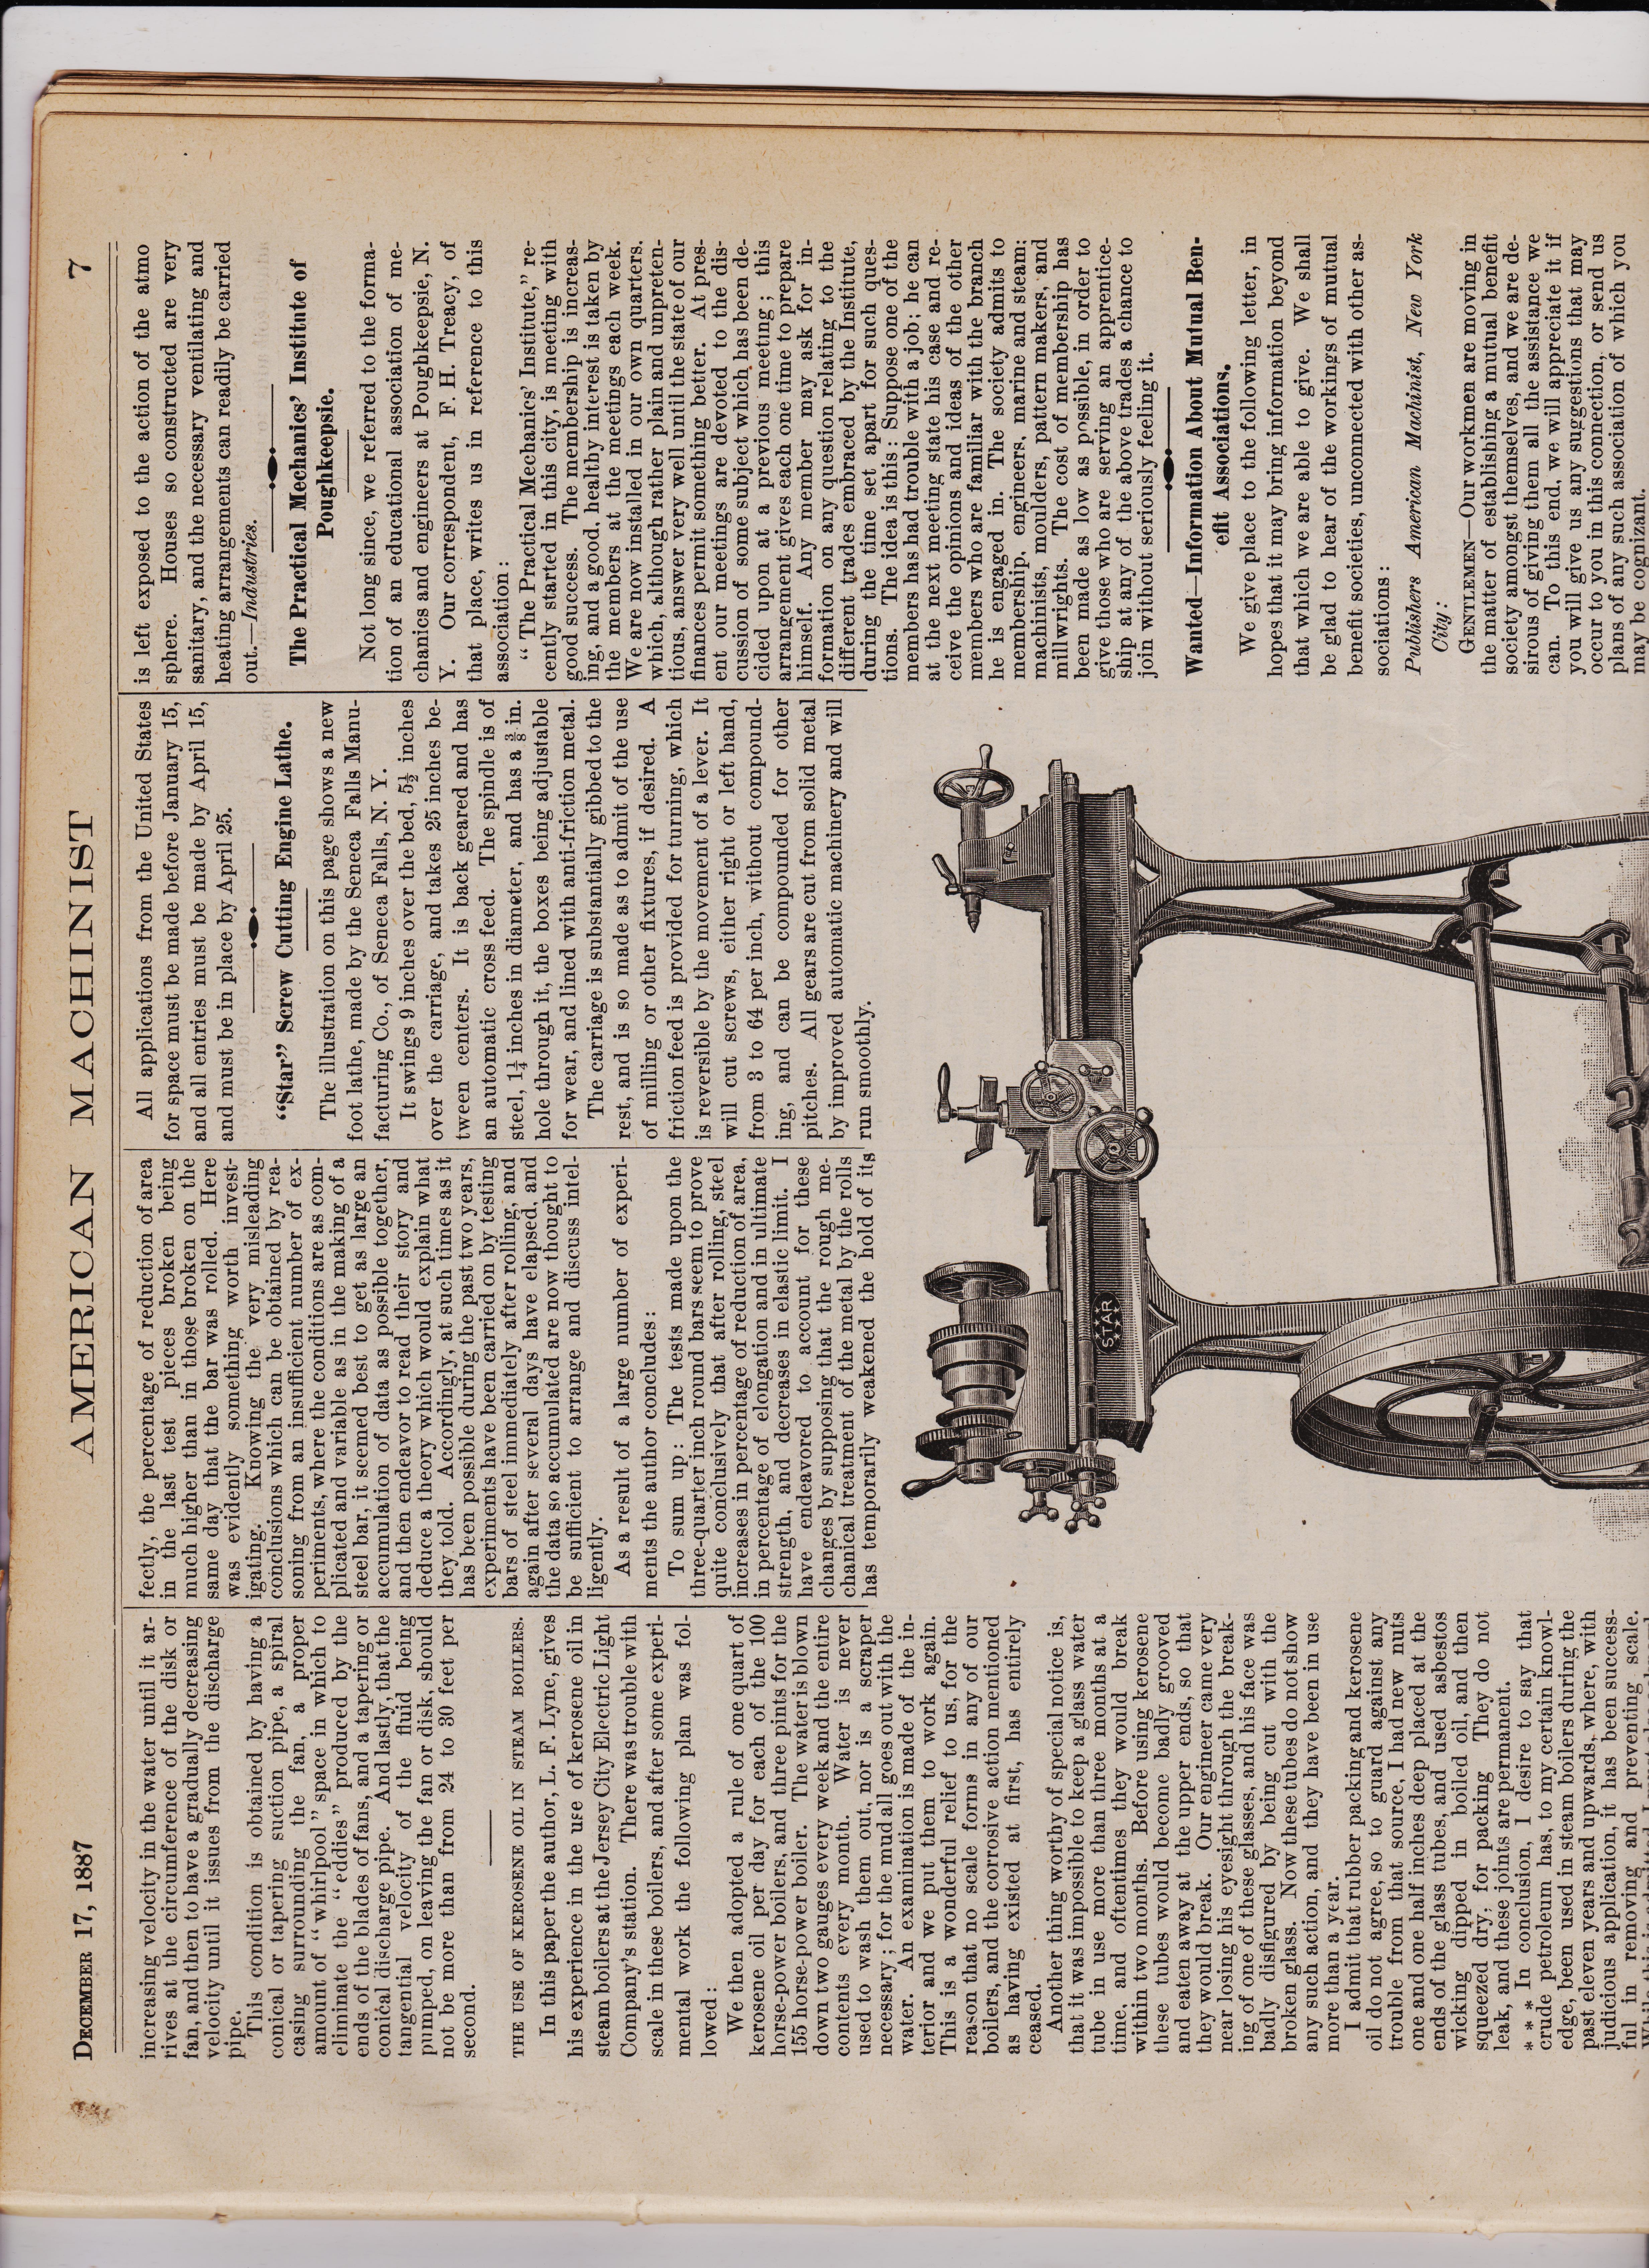 https://antiquemachinery.com/images-American-Machinist-Dec-17-1887/American-Machinist-Dec-17-1887-pg-7-top-Star-screw-cutting-Engine-Lathe.jpeg